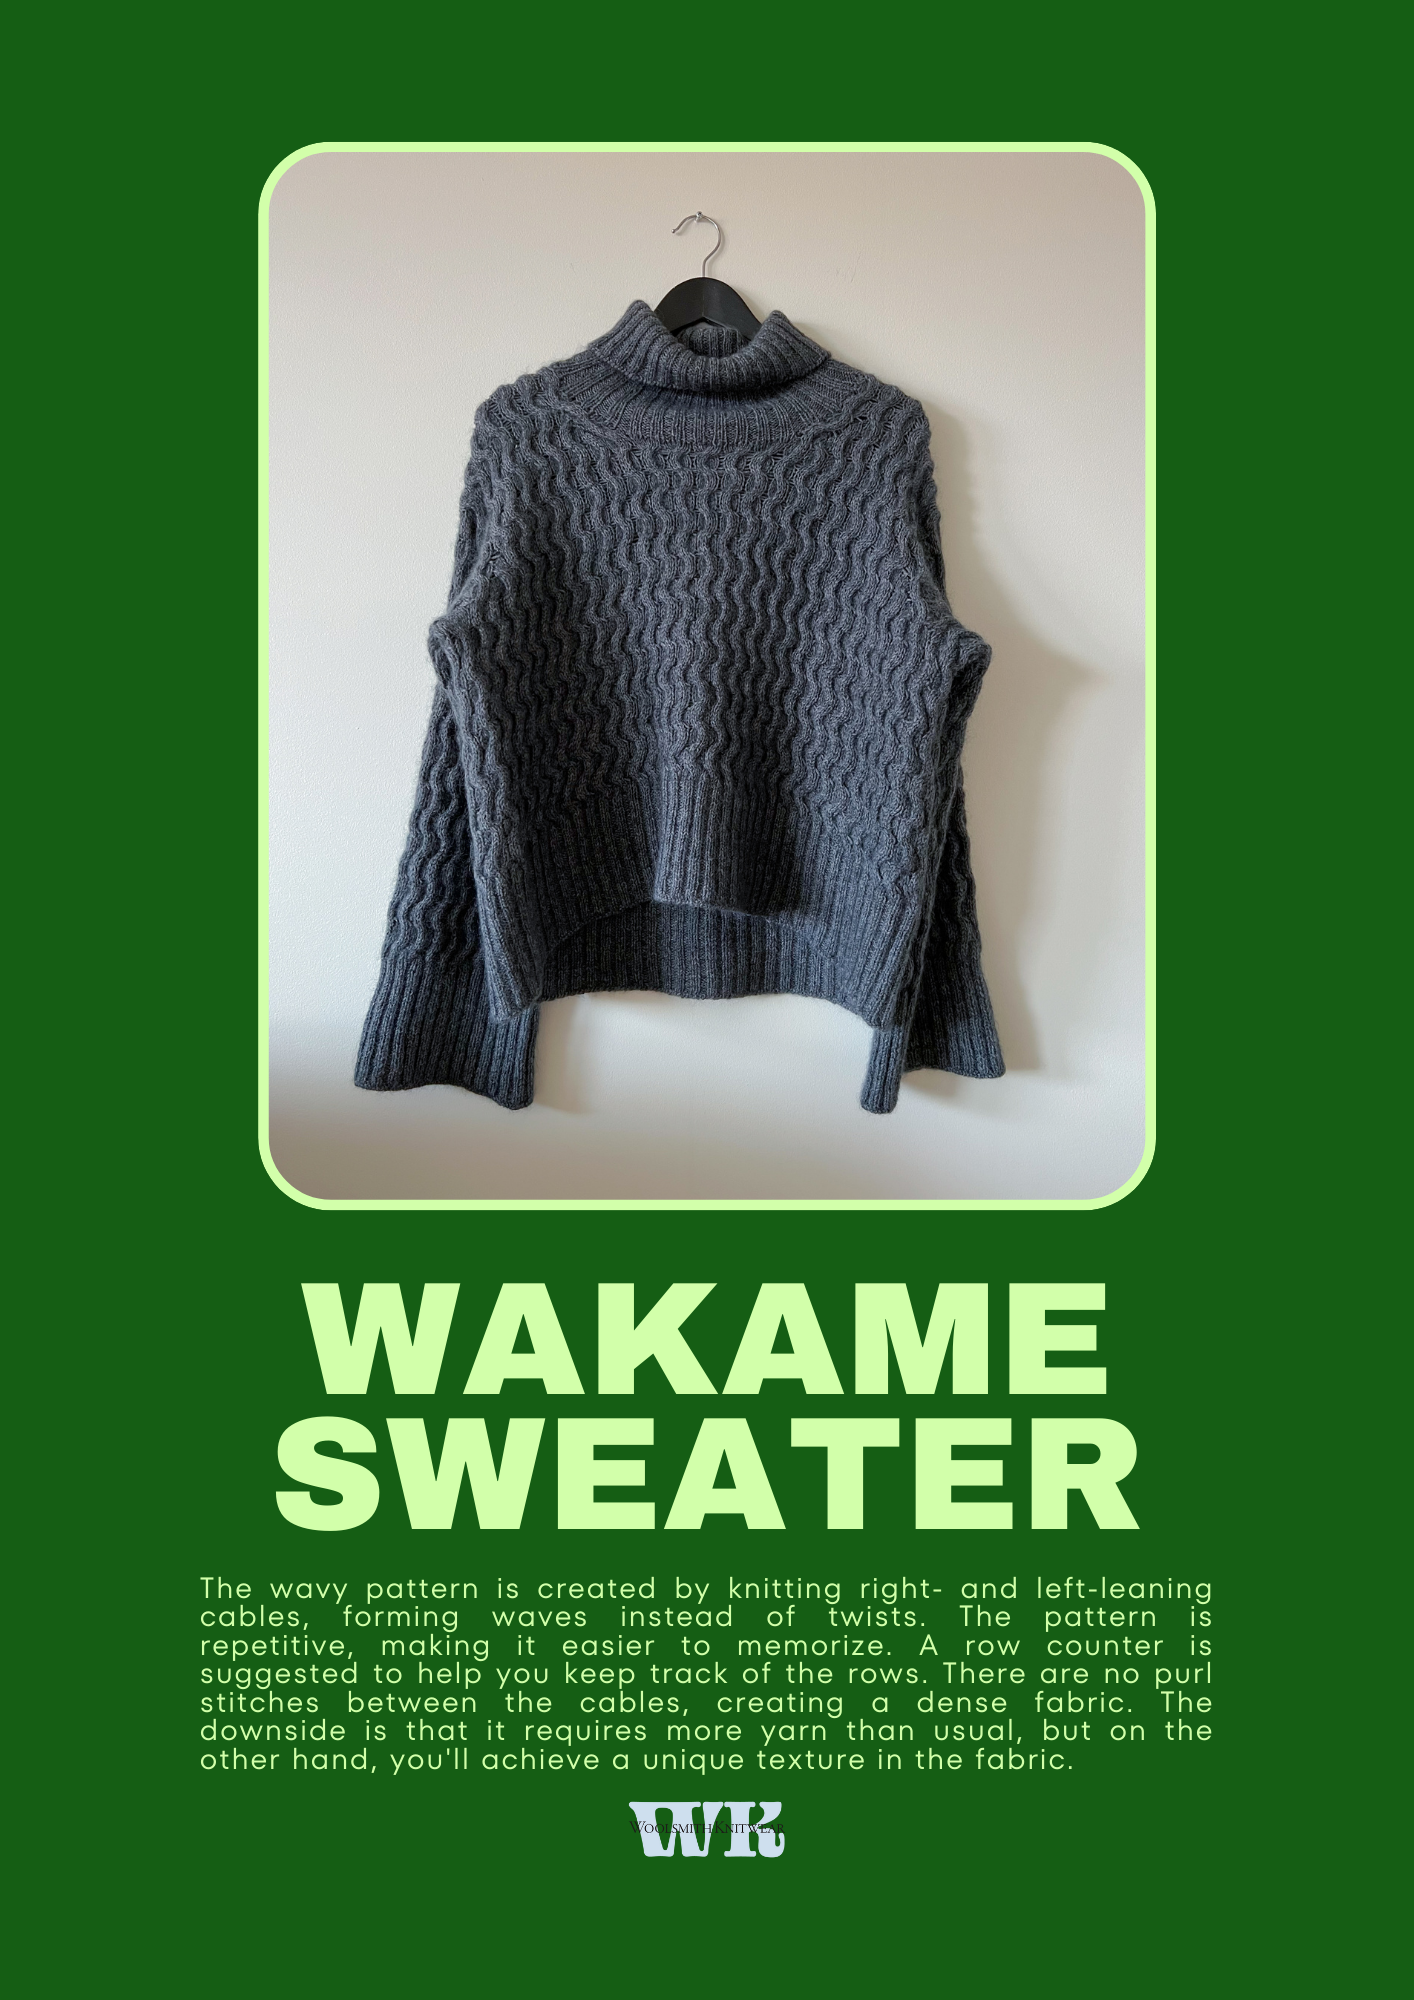 Wakame sweater – Woolsmith Knitwear